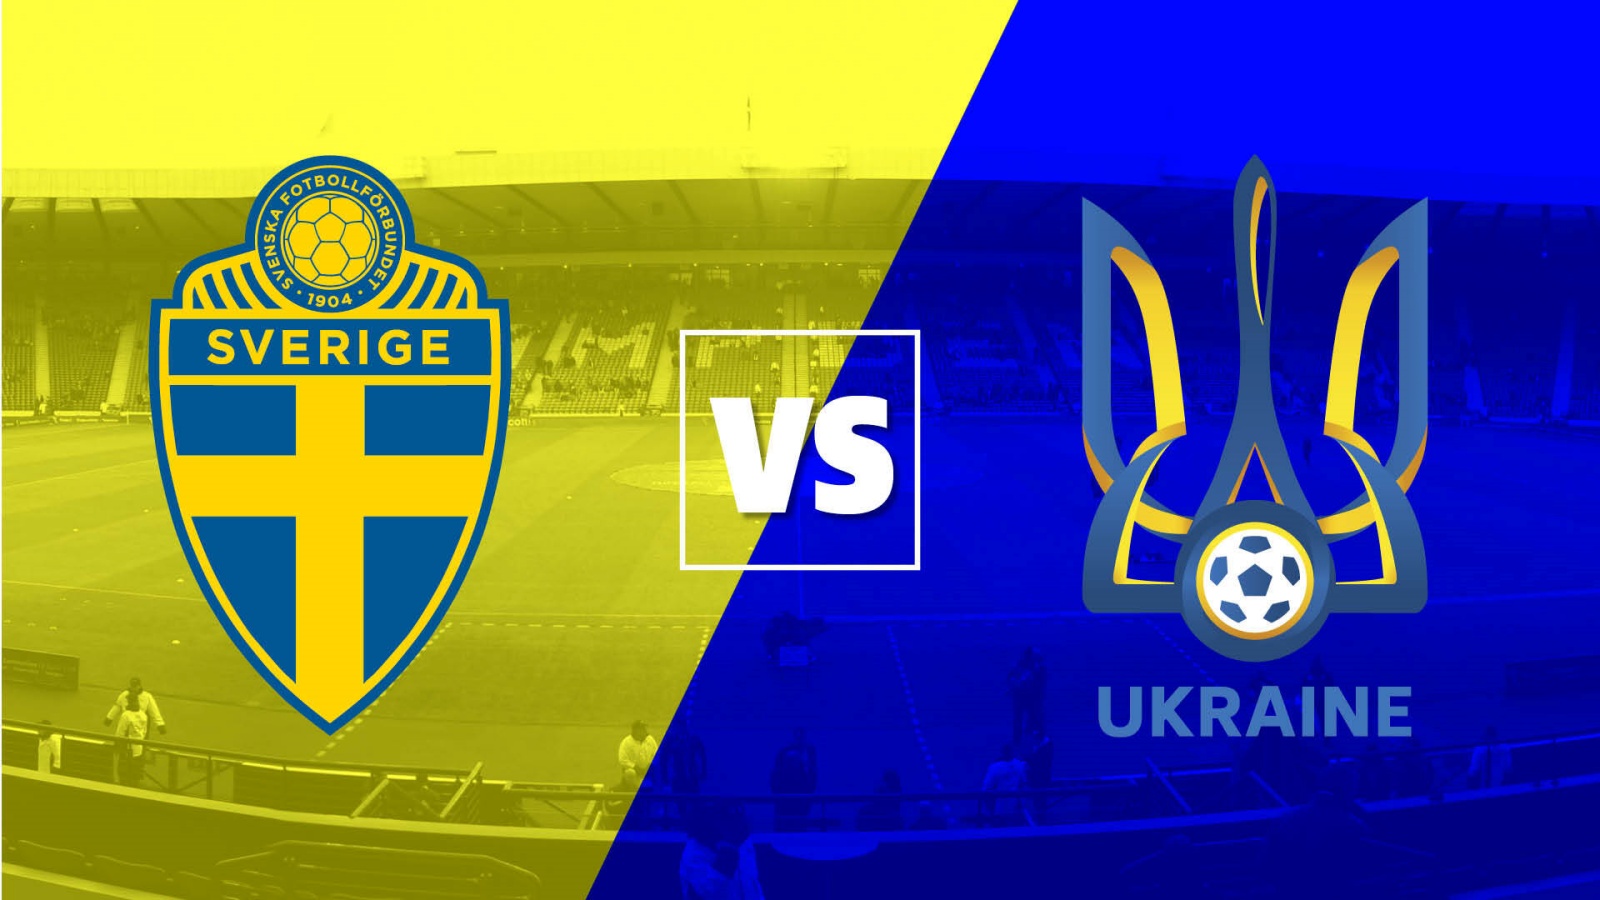 SWEDEN - UKRAINE LIVE PRO TV EURO 2020